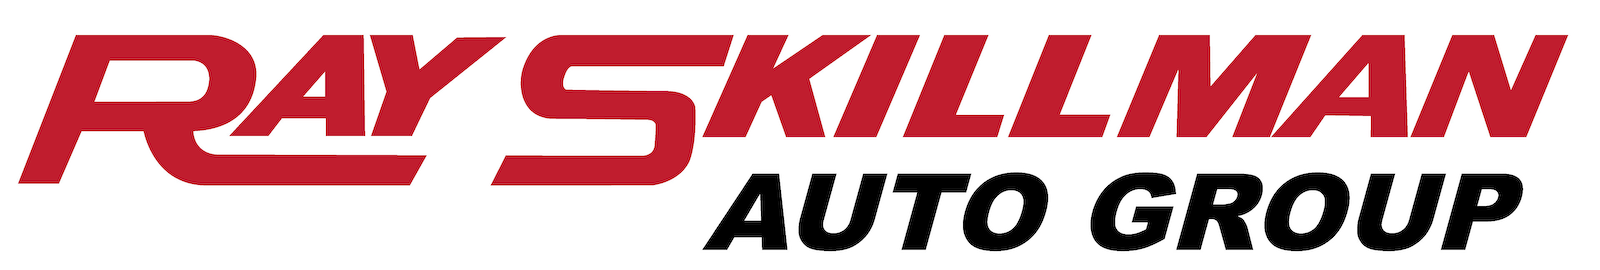 Ray Skillman Auto Group